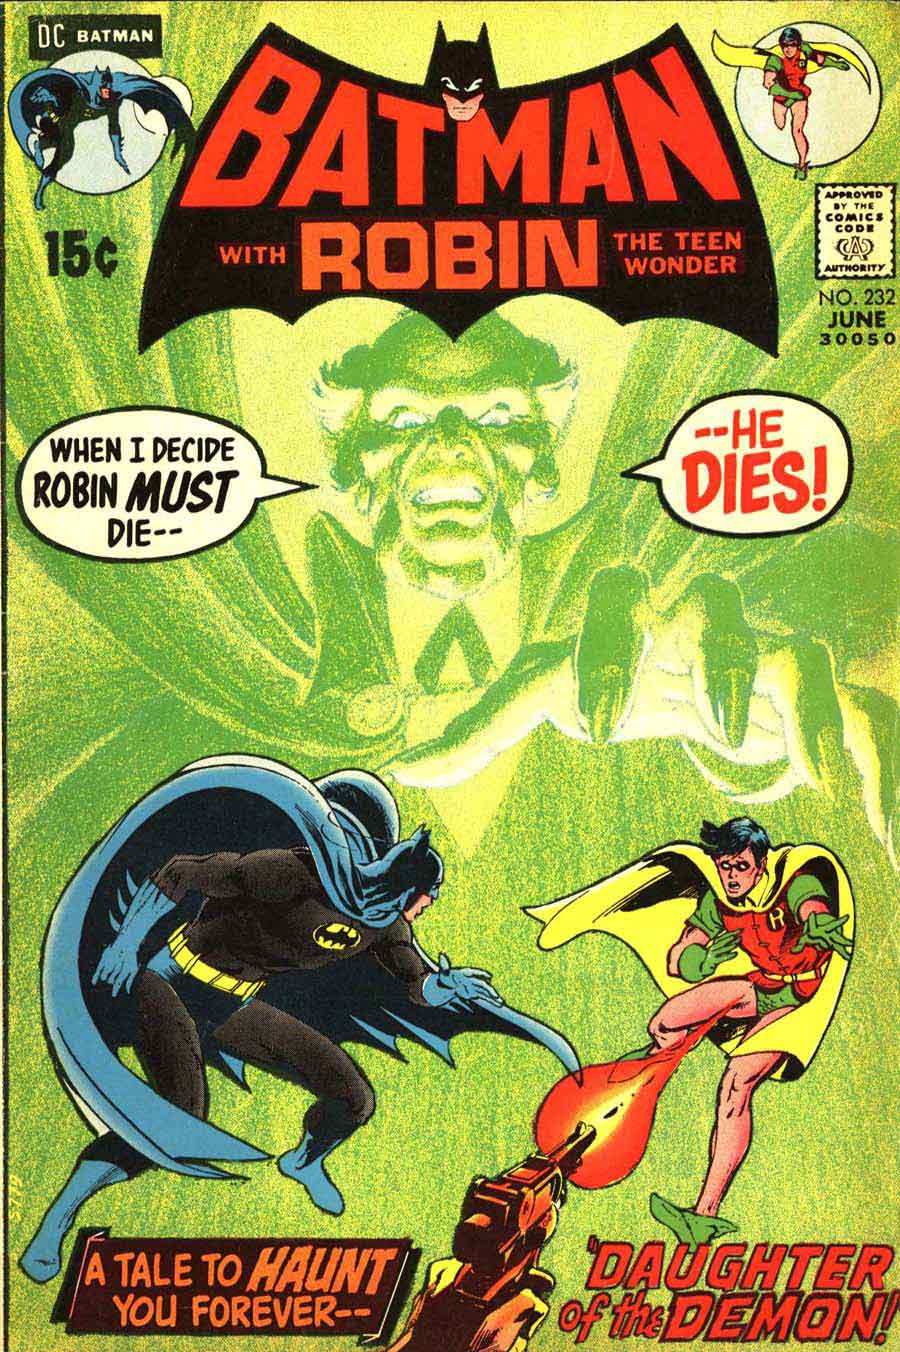 Batman #232 bronze age 1970s dc ras al ghul comic book cover art by Neal Adams